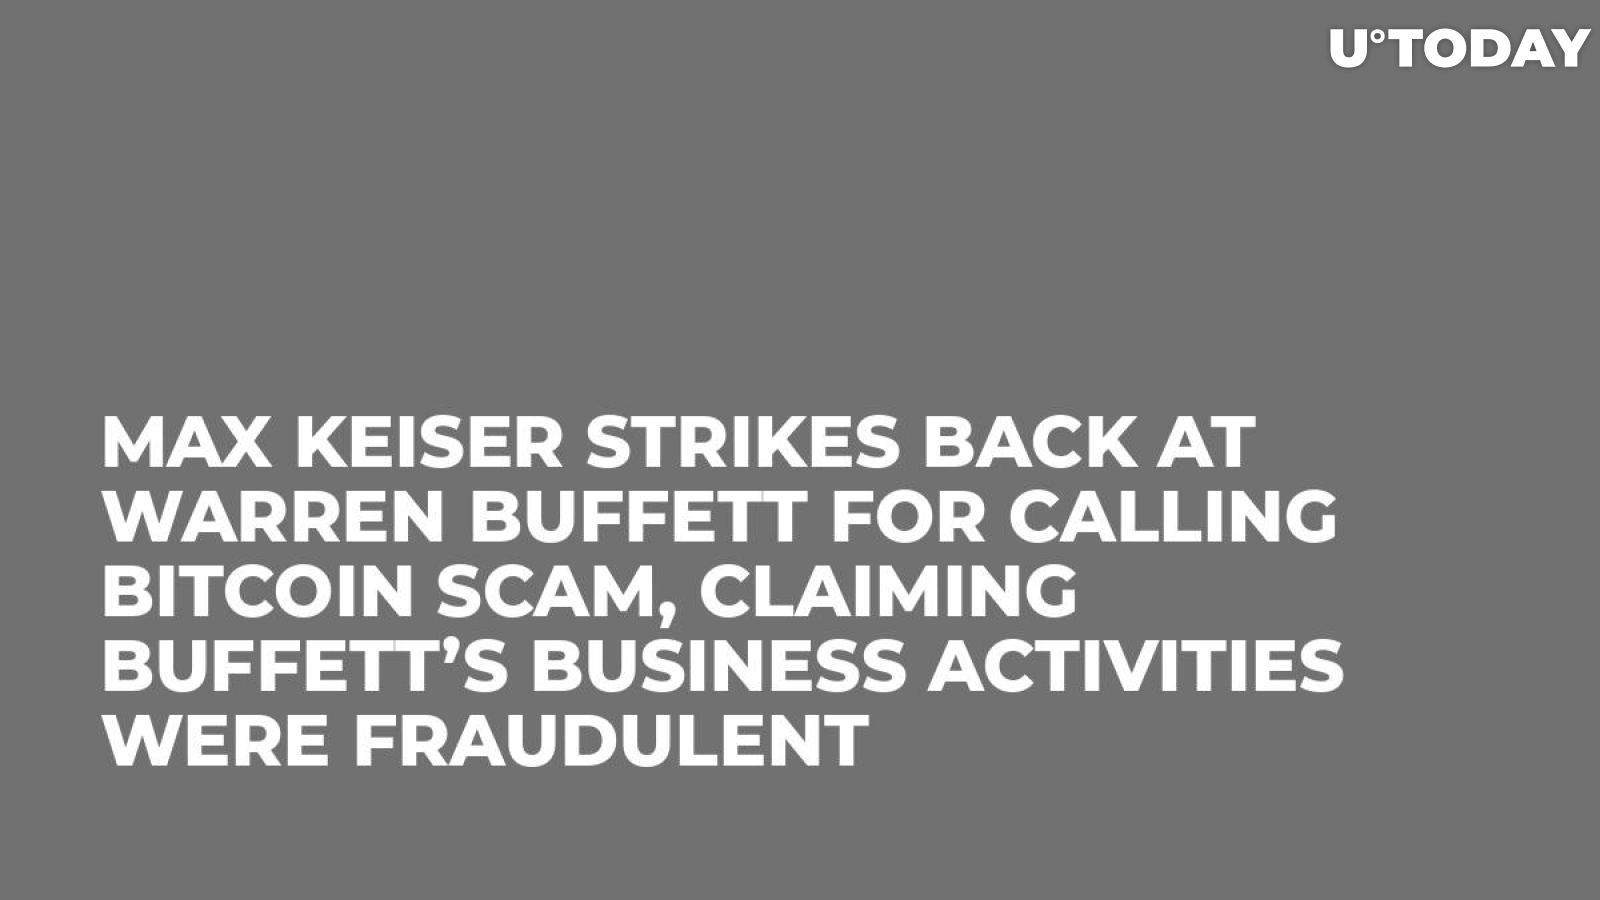 Max Keiser Strikes Back at Warren Buffett for Calling Bitcoin Scam, Claiming Buffett’s Business Activities Were Fraudulent